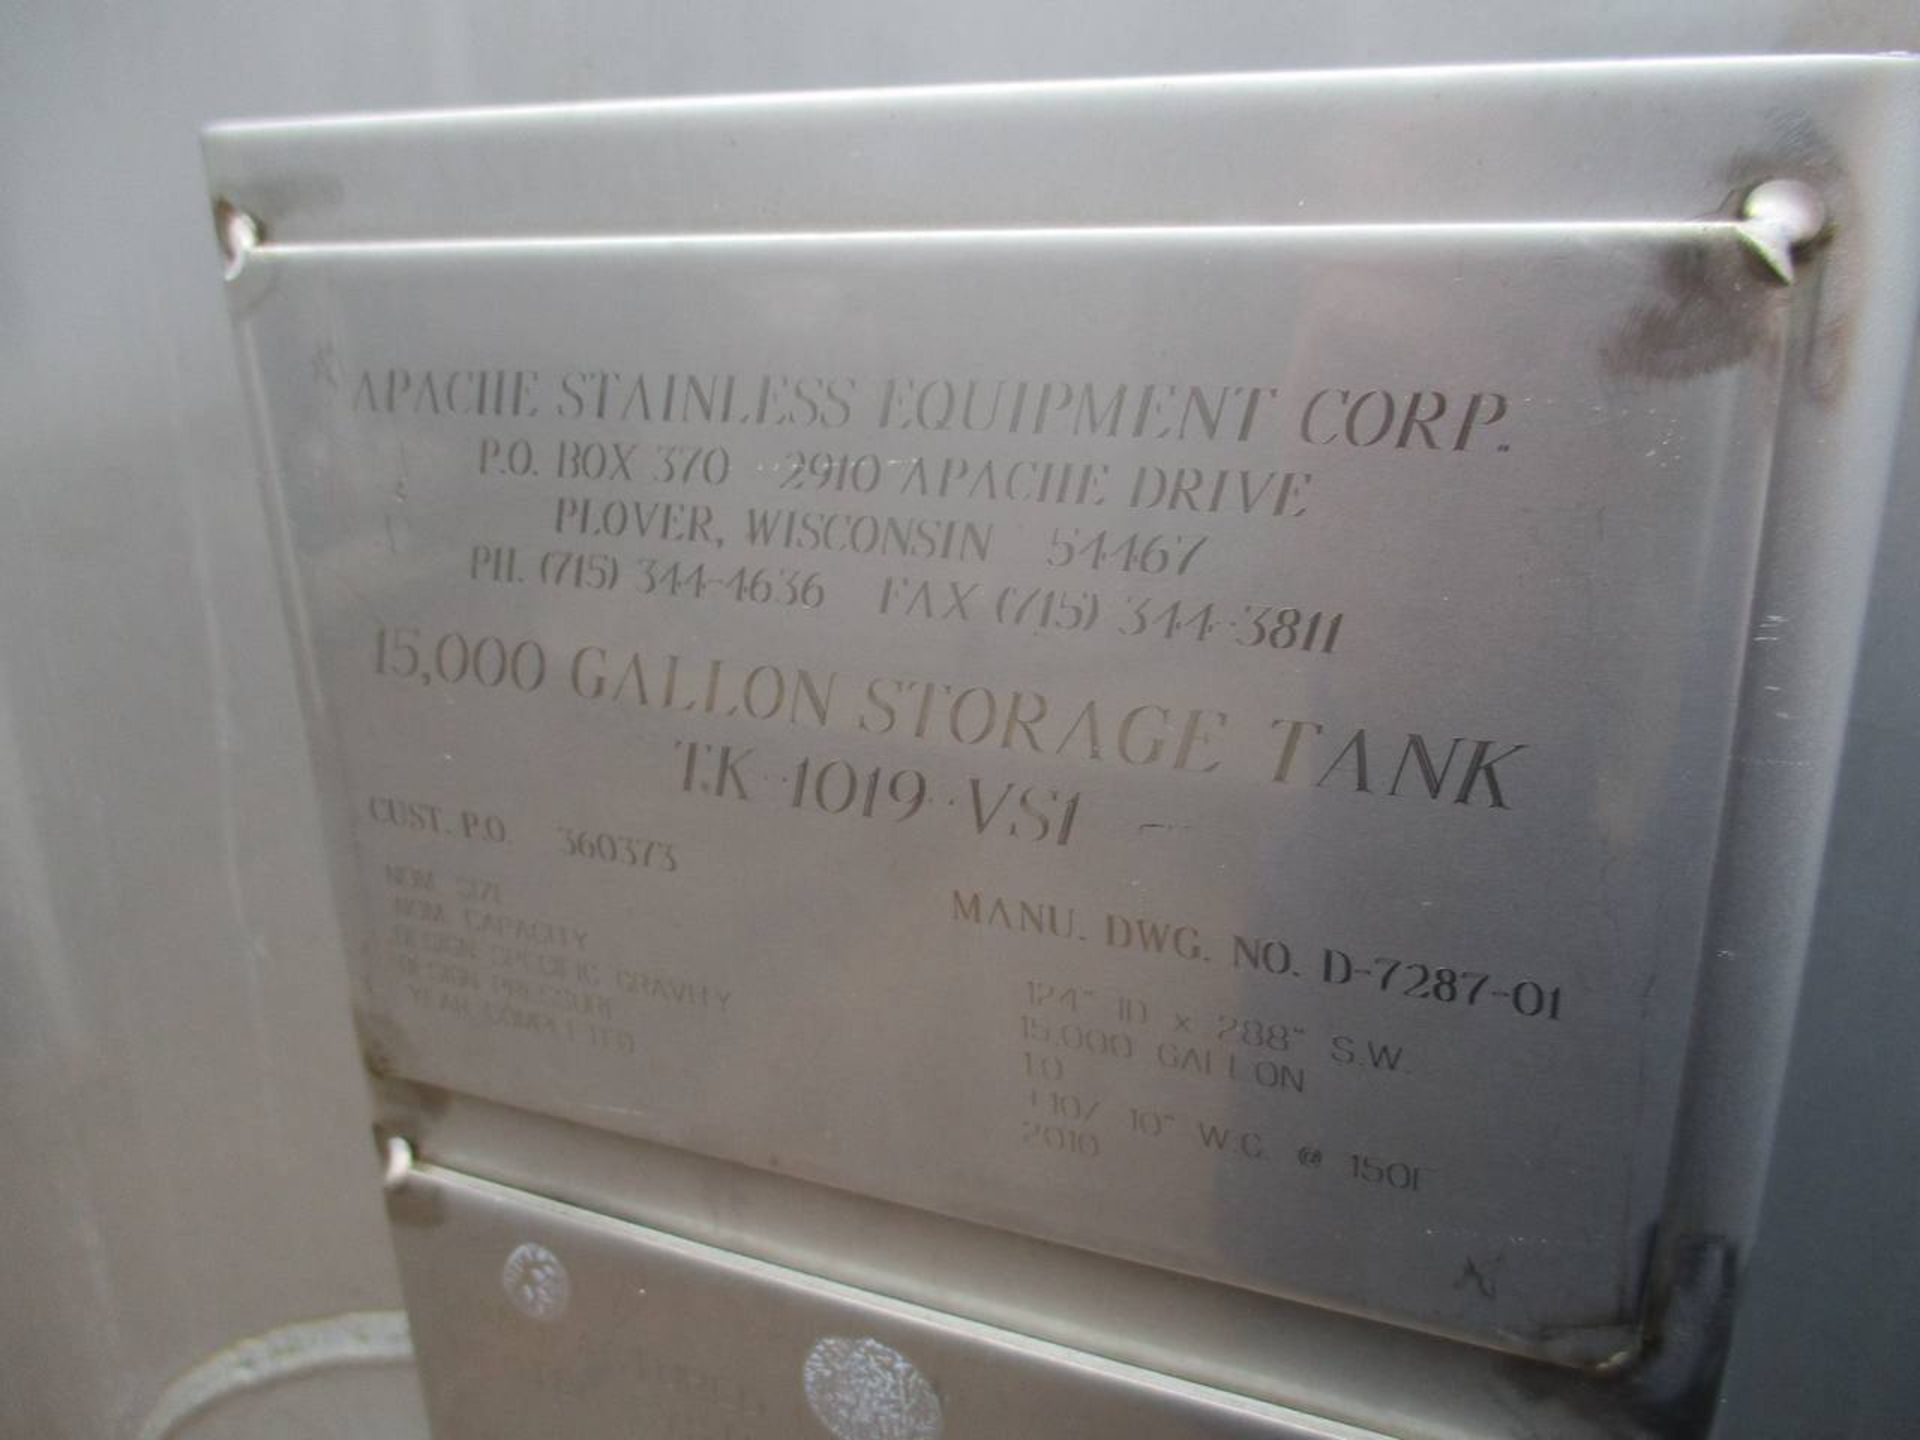 2011 Apache 15,000 Gallon Stainless Storage Tank - Image 3 of 6